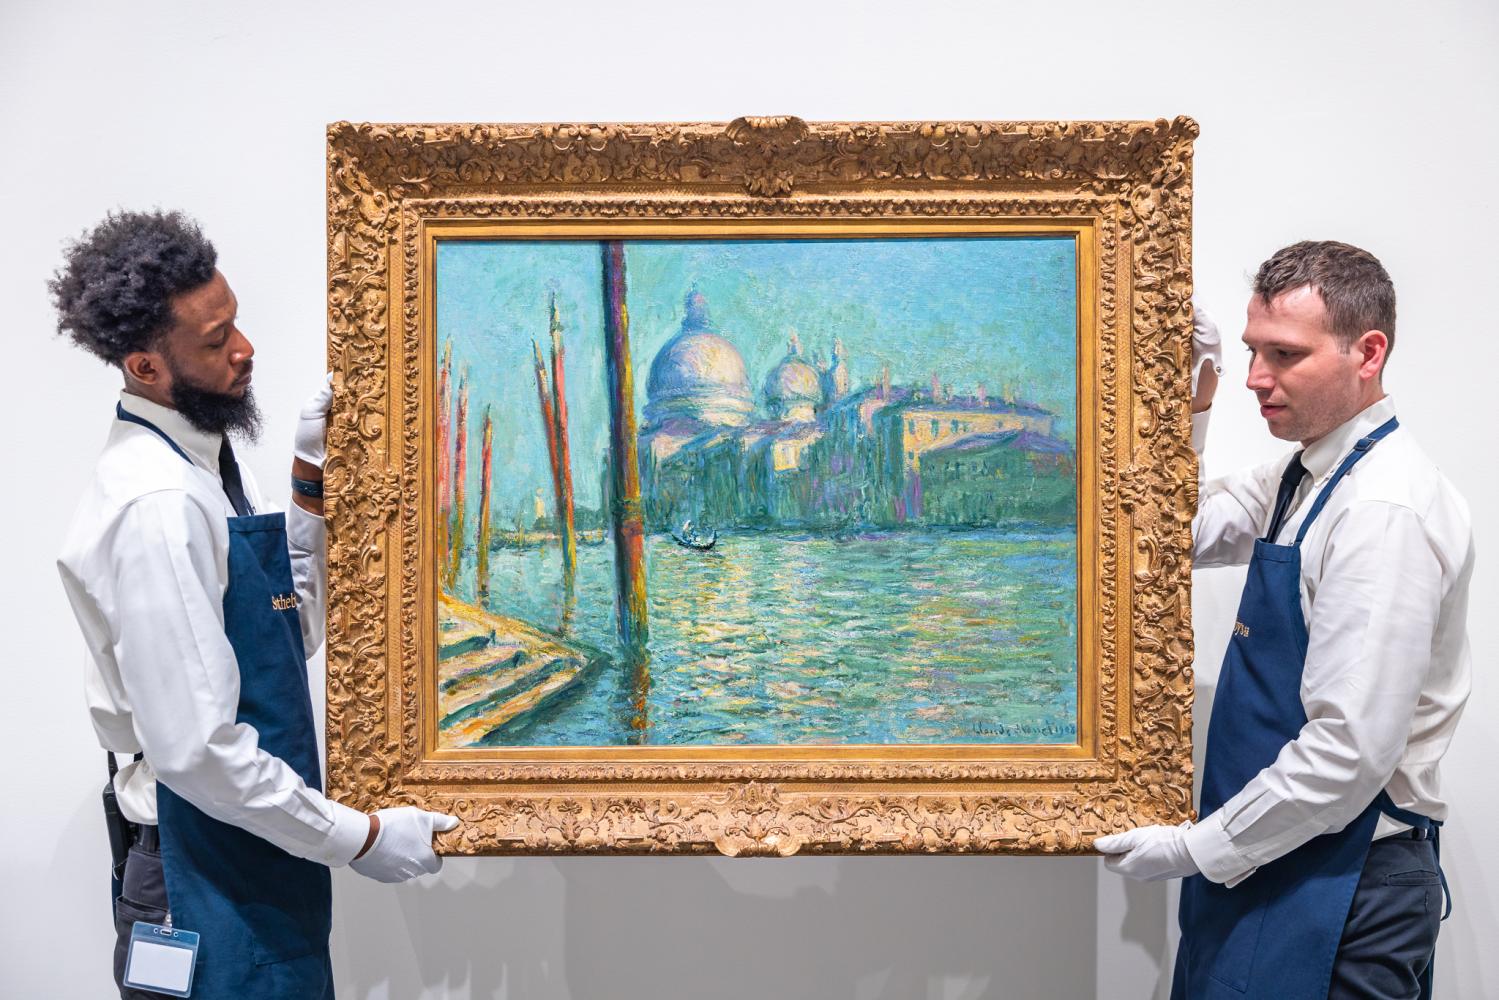 "Le Grand Canal et Santa Maria della Salute" ein Venedig-Bild des französischen Malers Claude Monet (1840-1926)